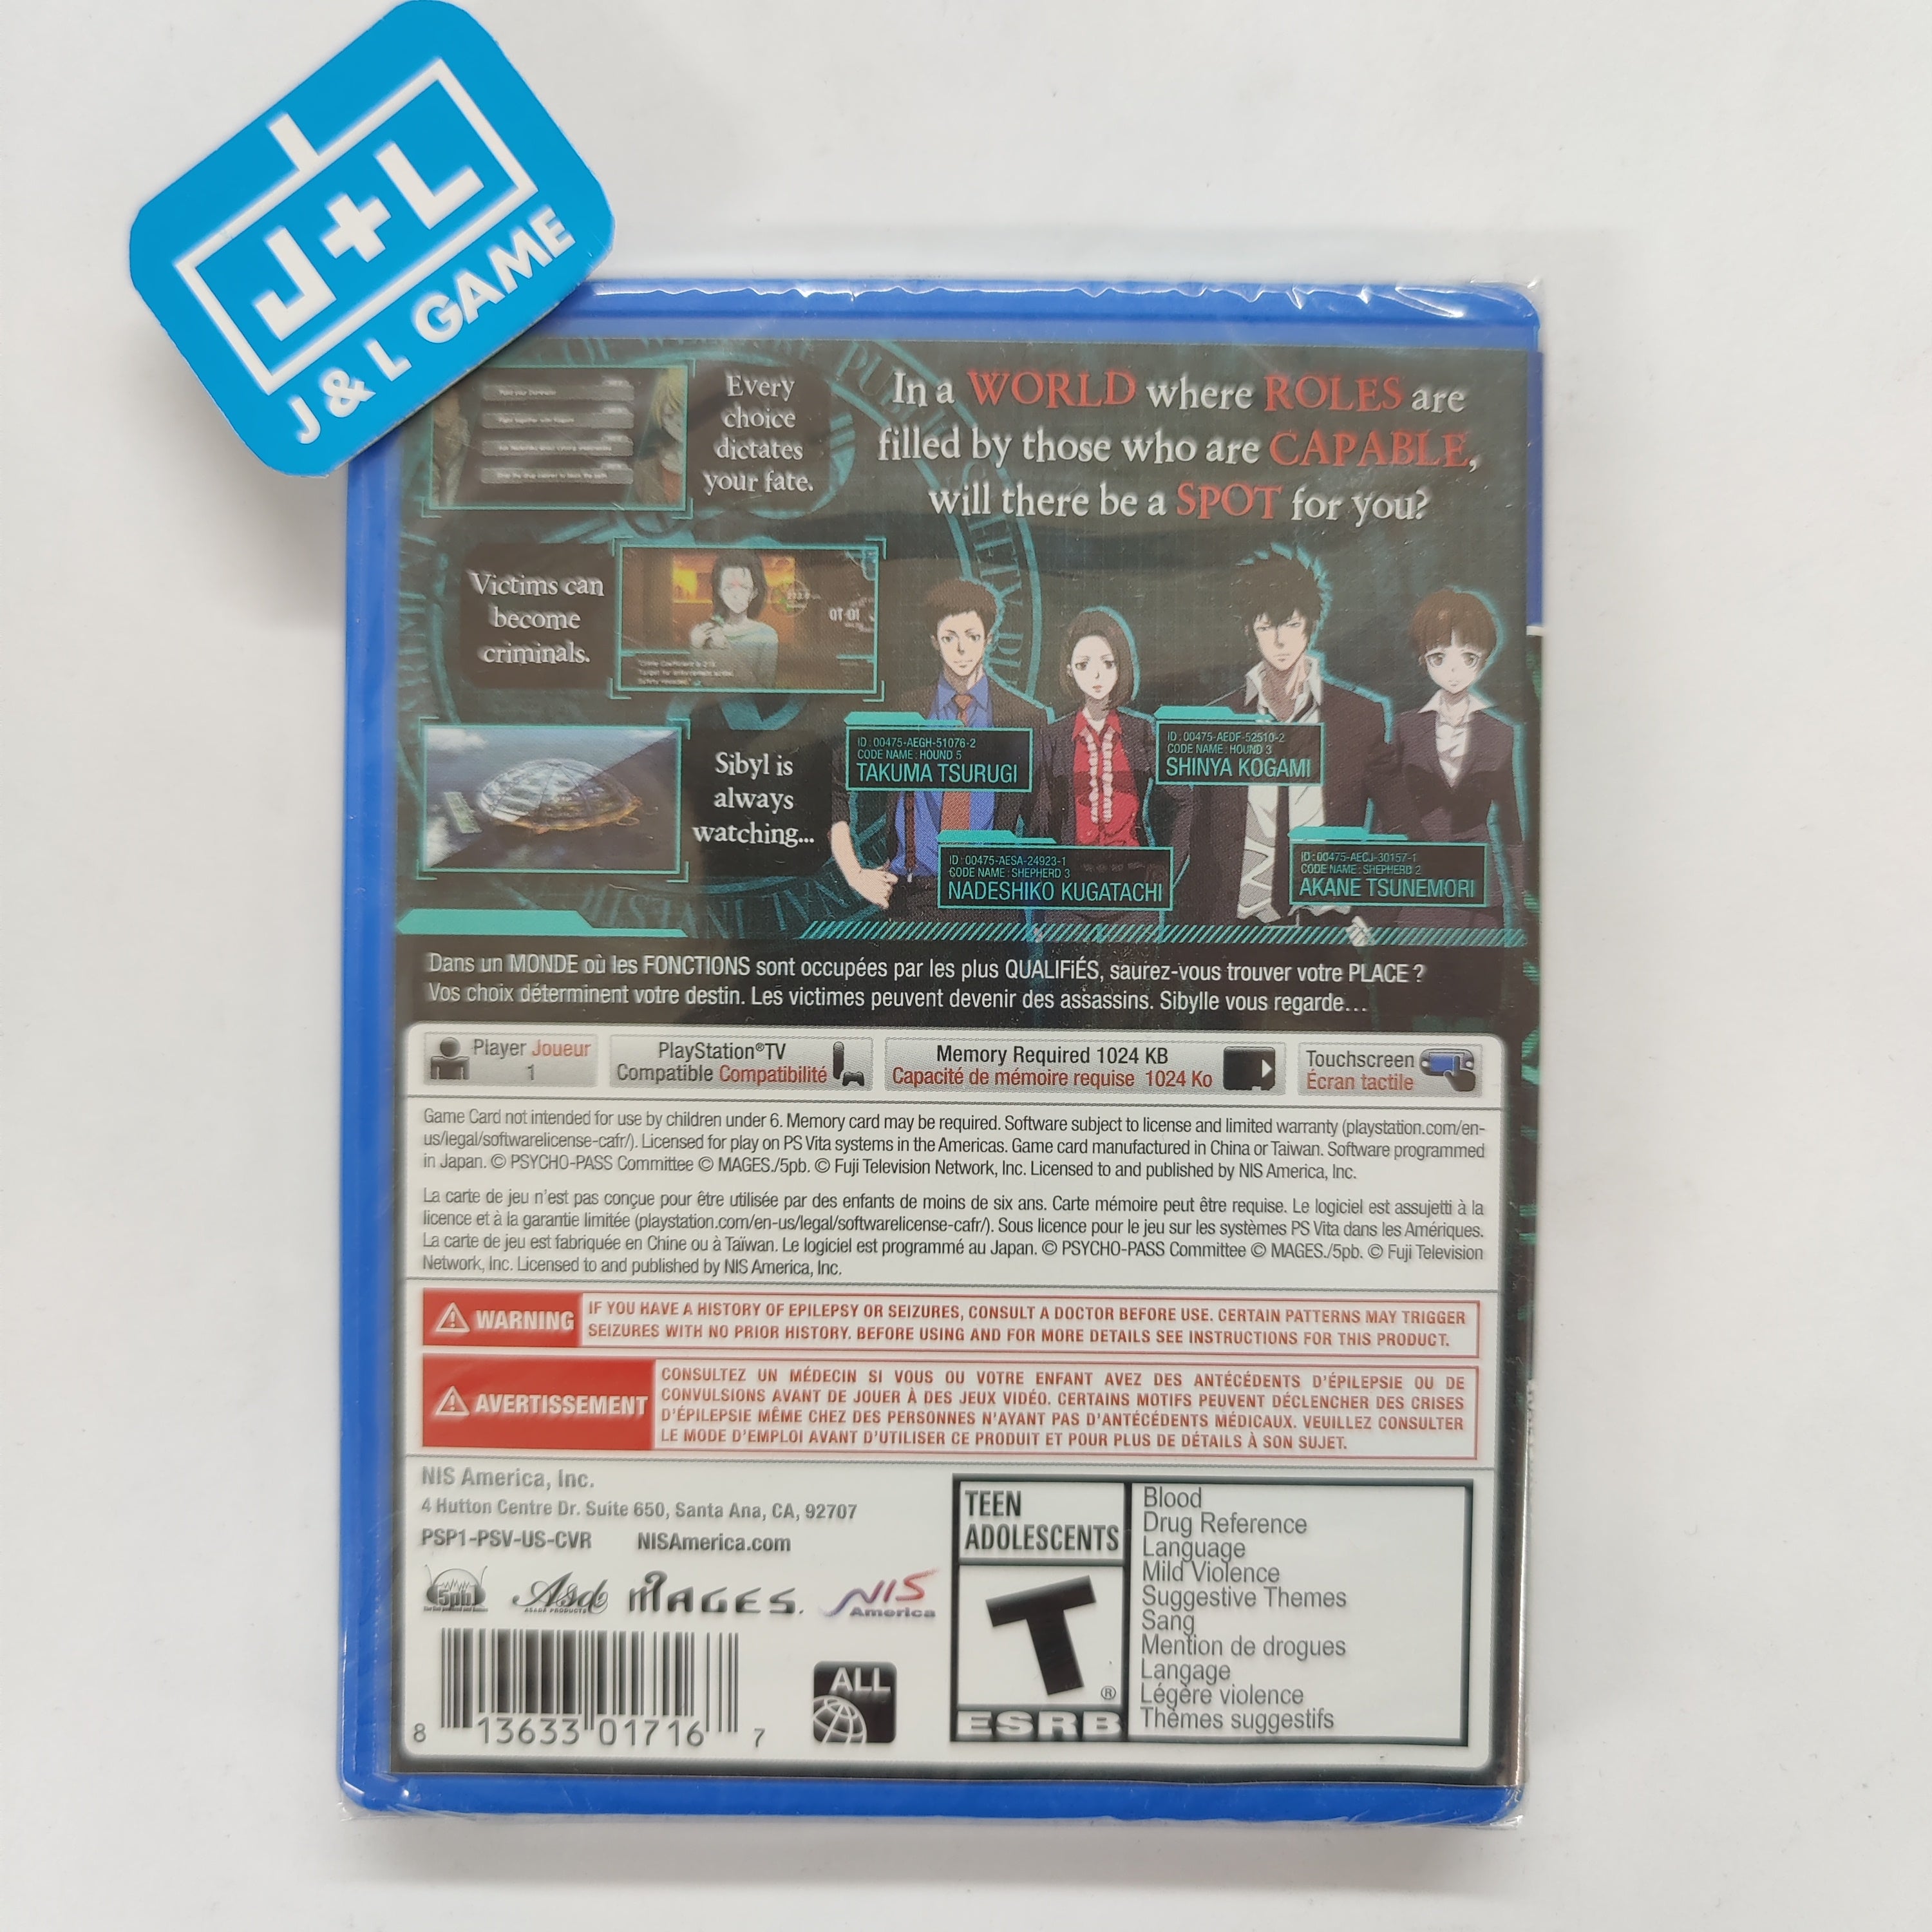 Psycho-Pass: Mandatory Happiness - (PSV) PlayStation Vita Video Games NIS America   